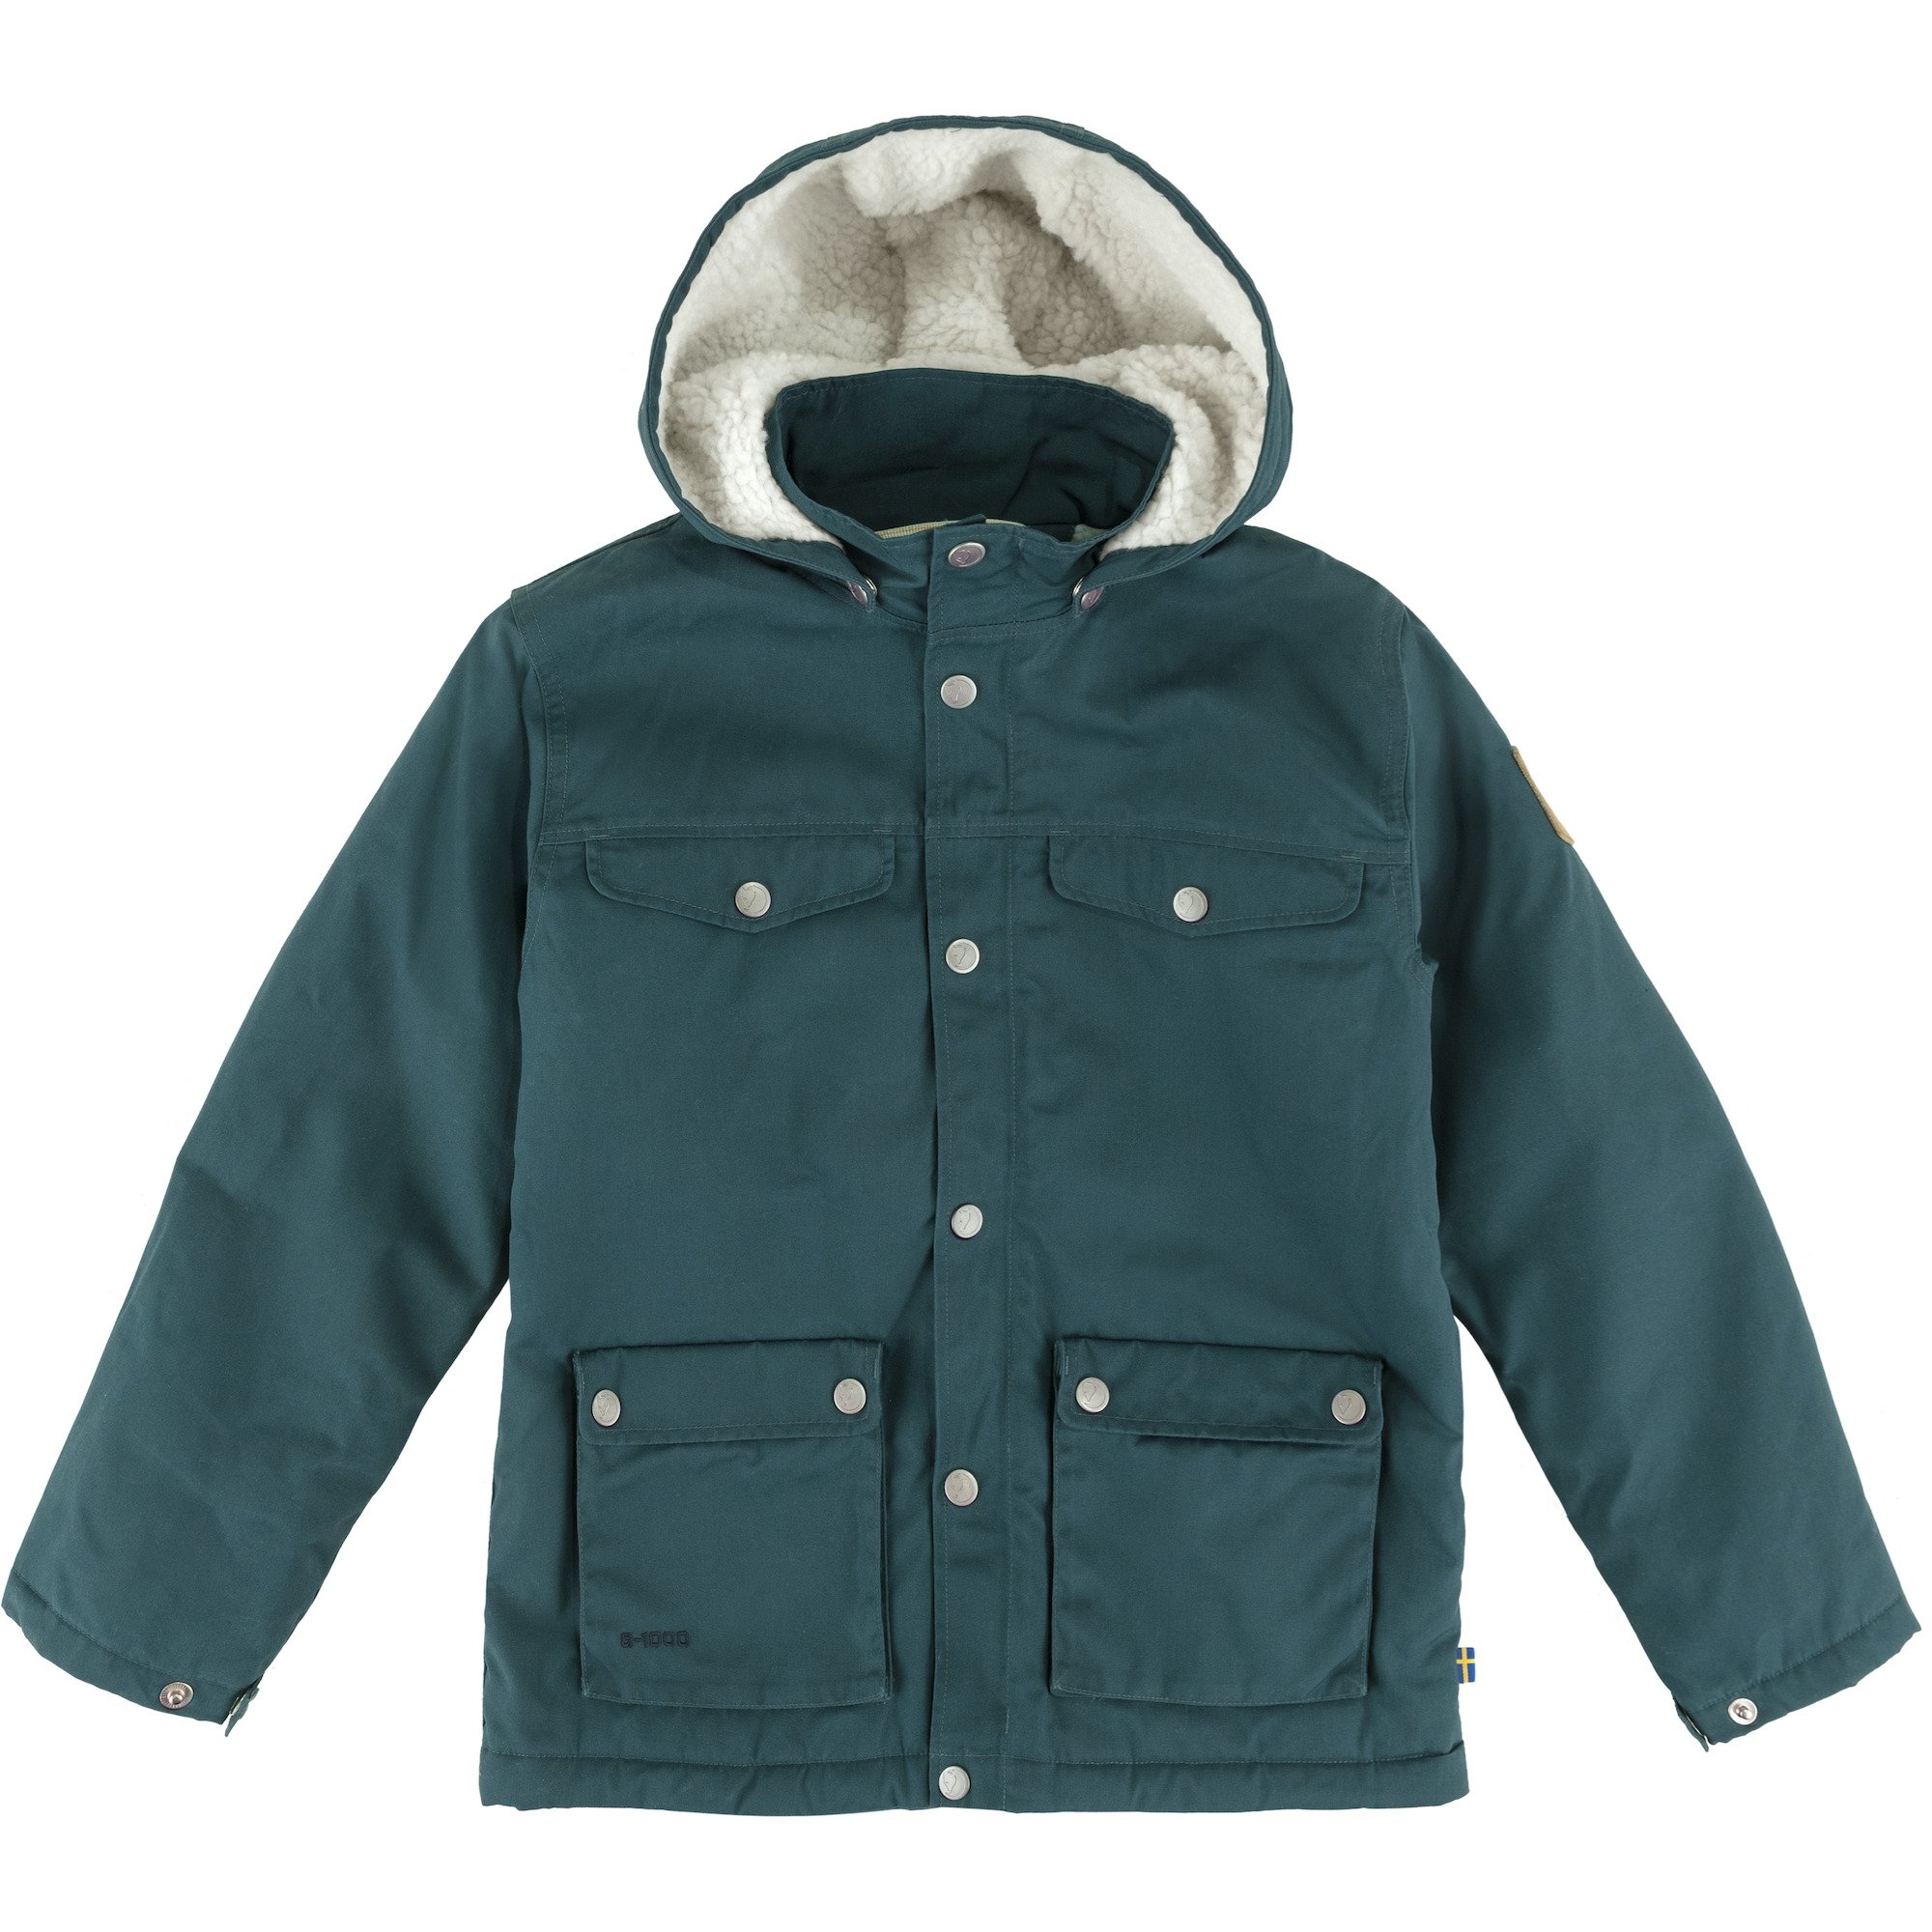 Discreet onpeilbaar Begrip Kids Greenland Winter Jacket